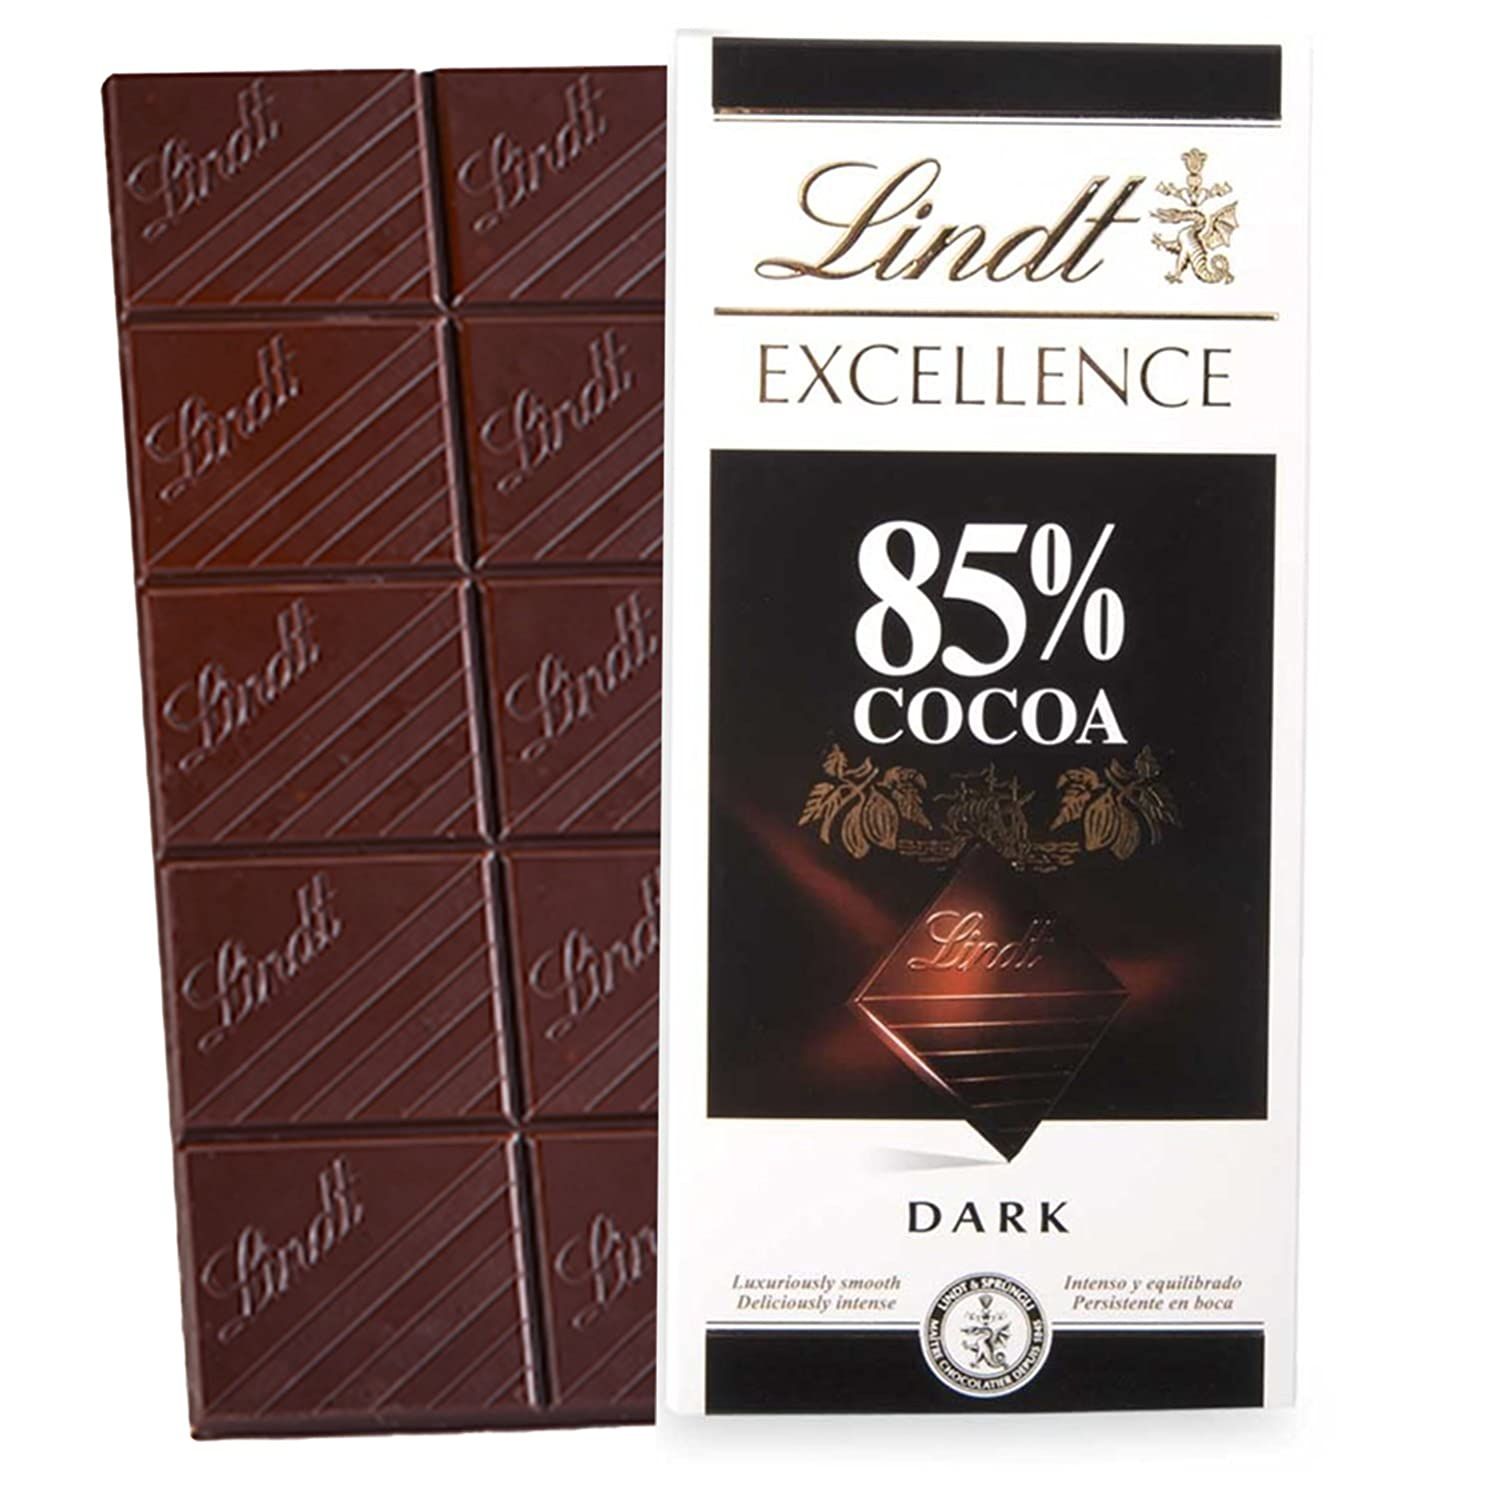 Lindt 85% Dark Chocolate Bar Image